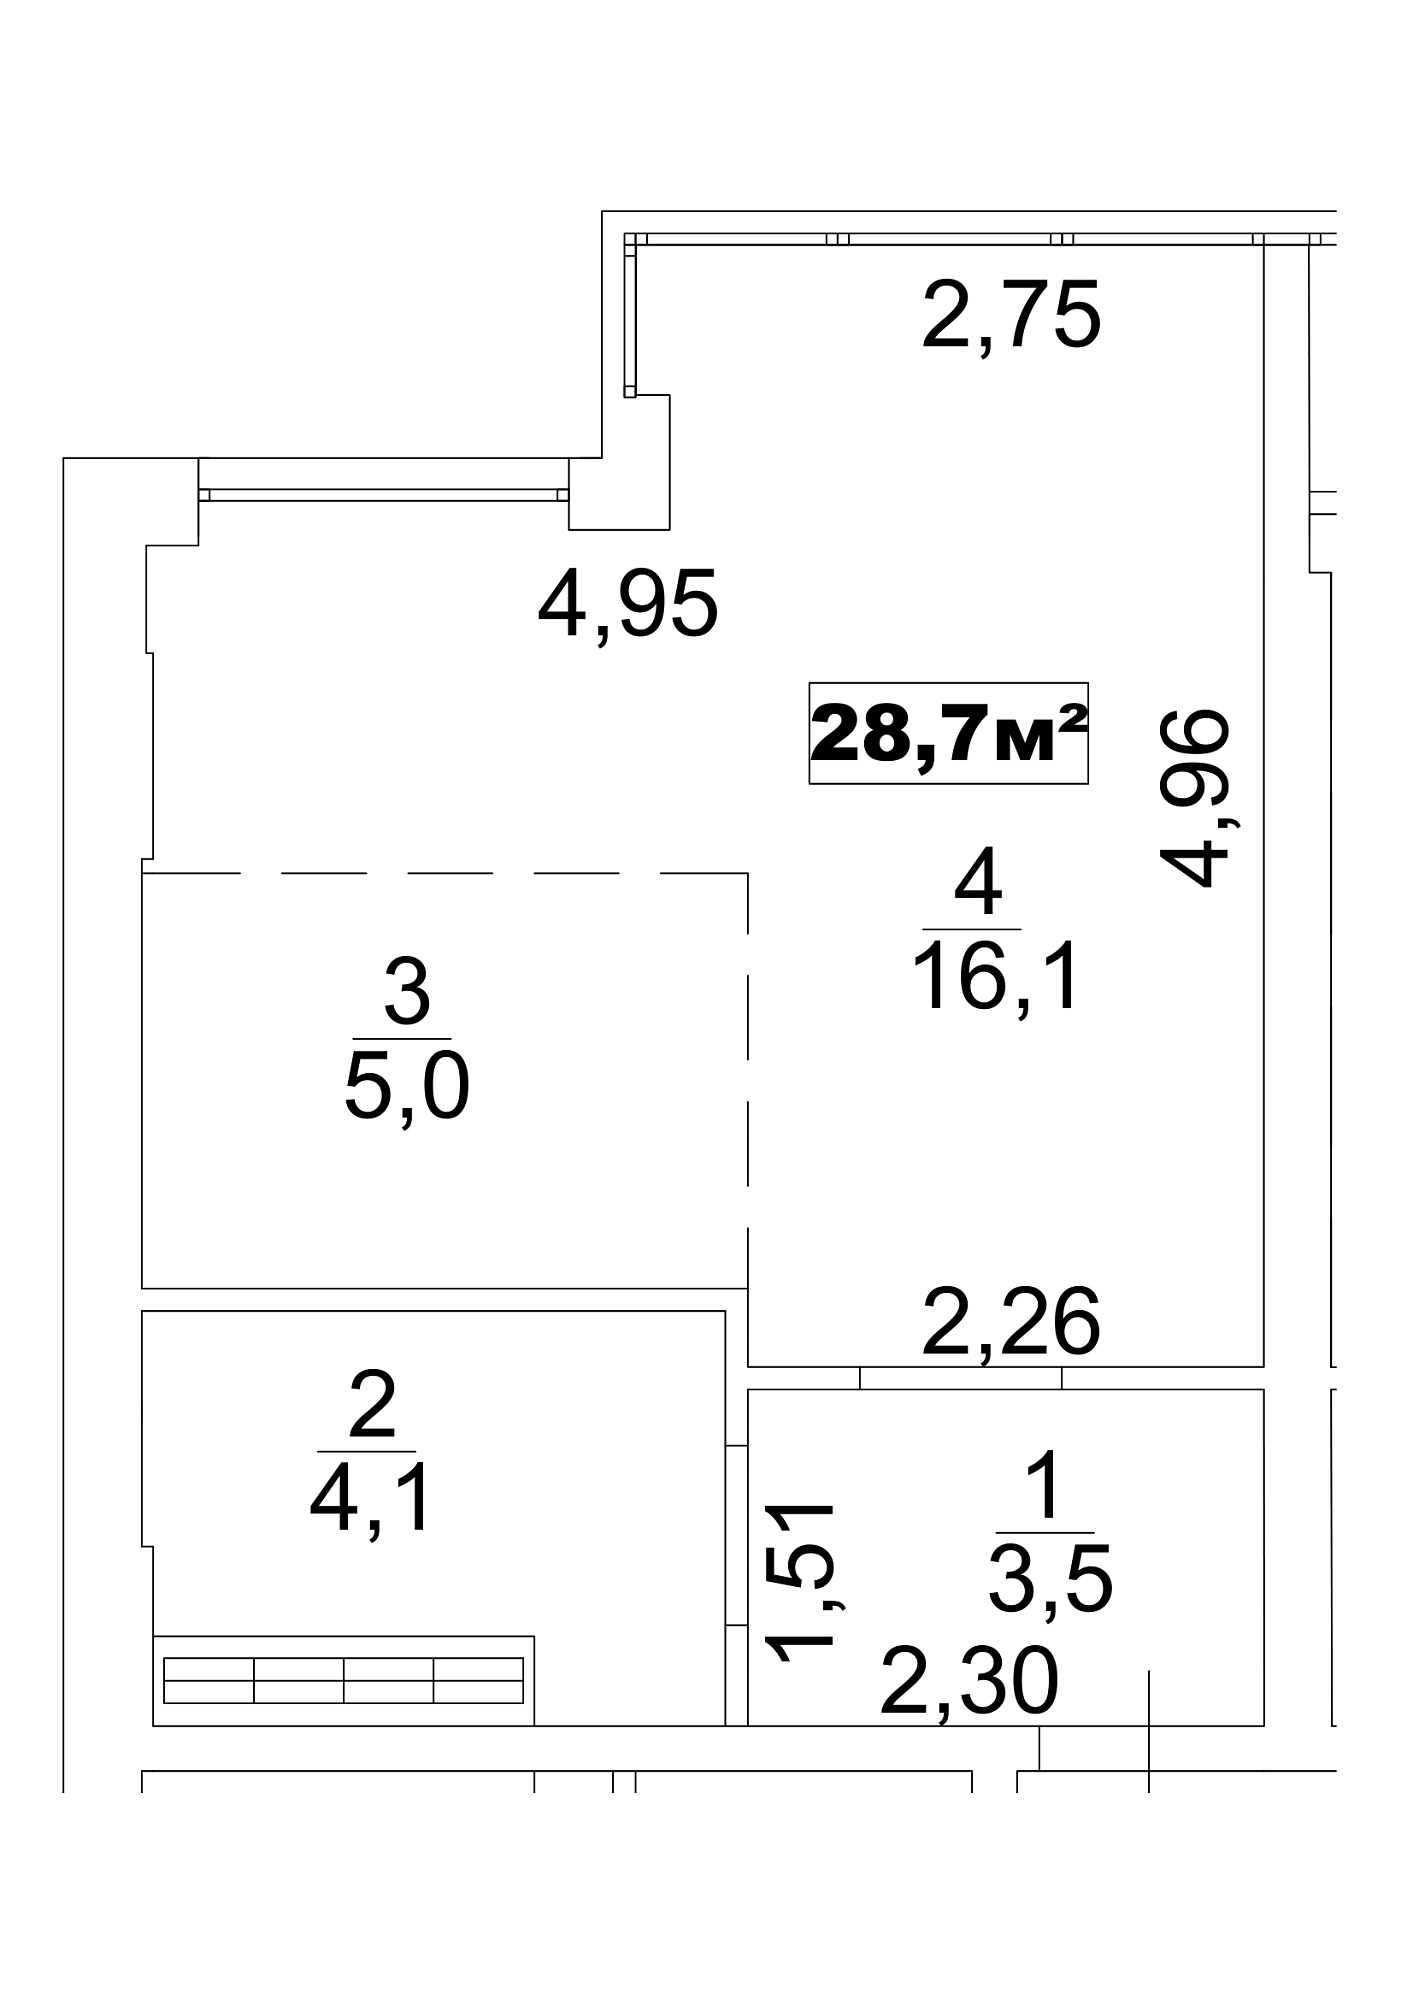 Planning Smart flats area 28.7m2, AB-13-06/0045б.